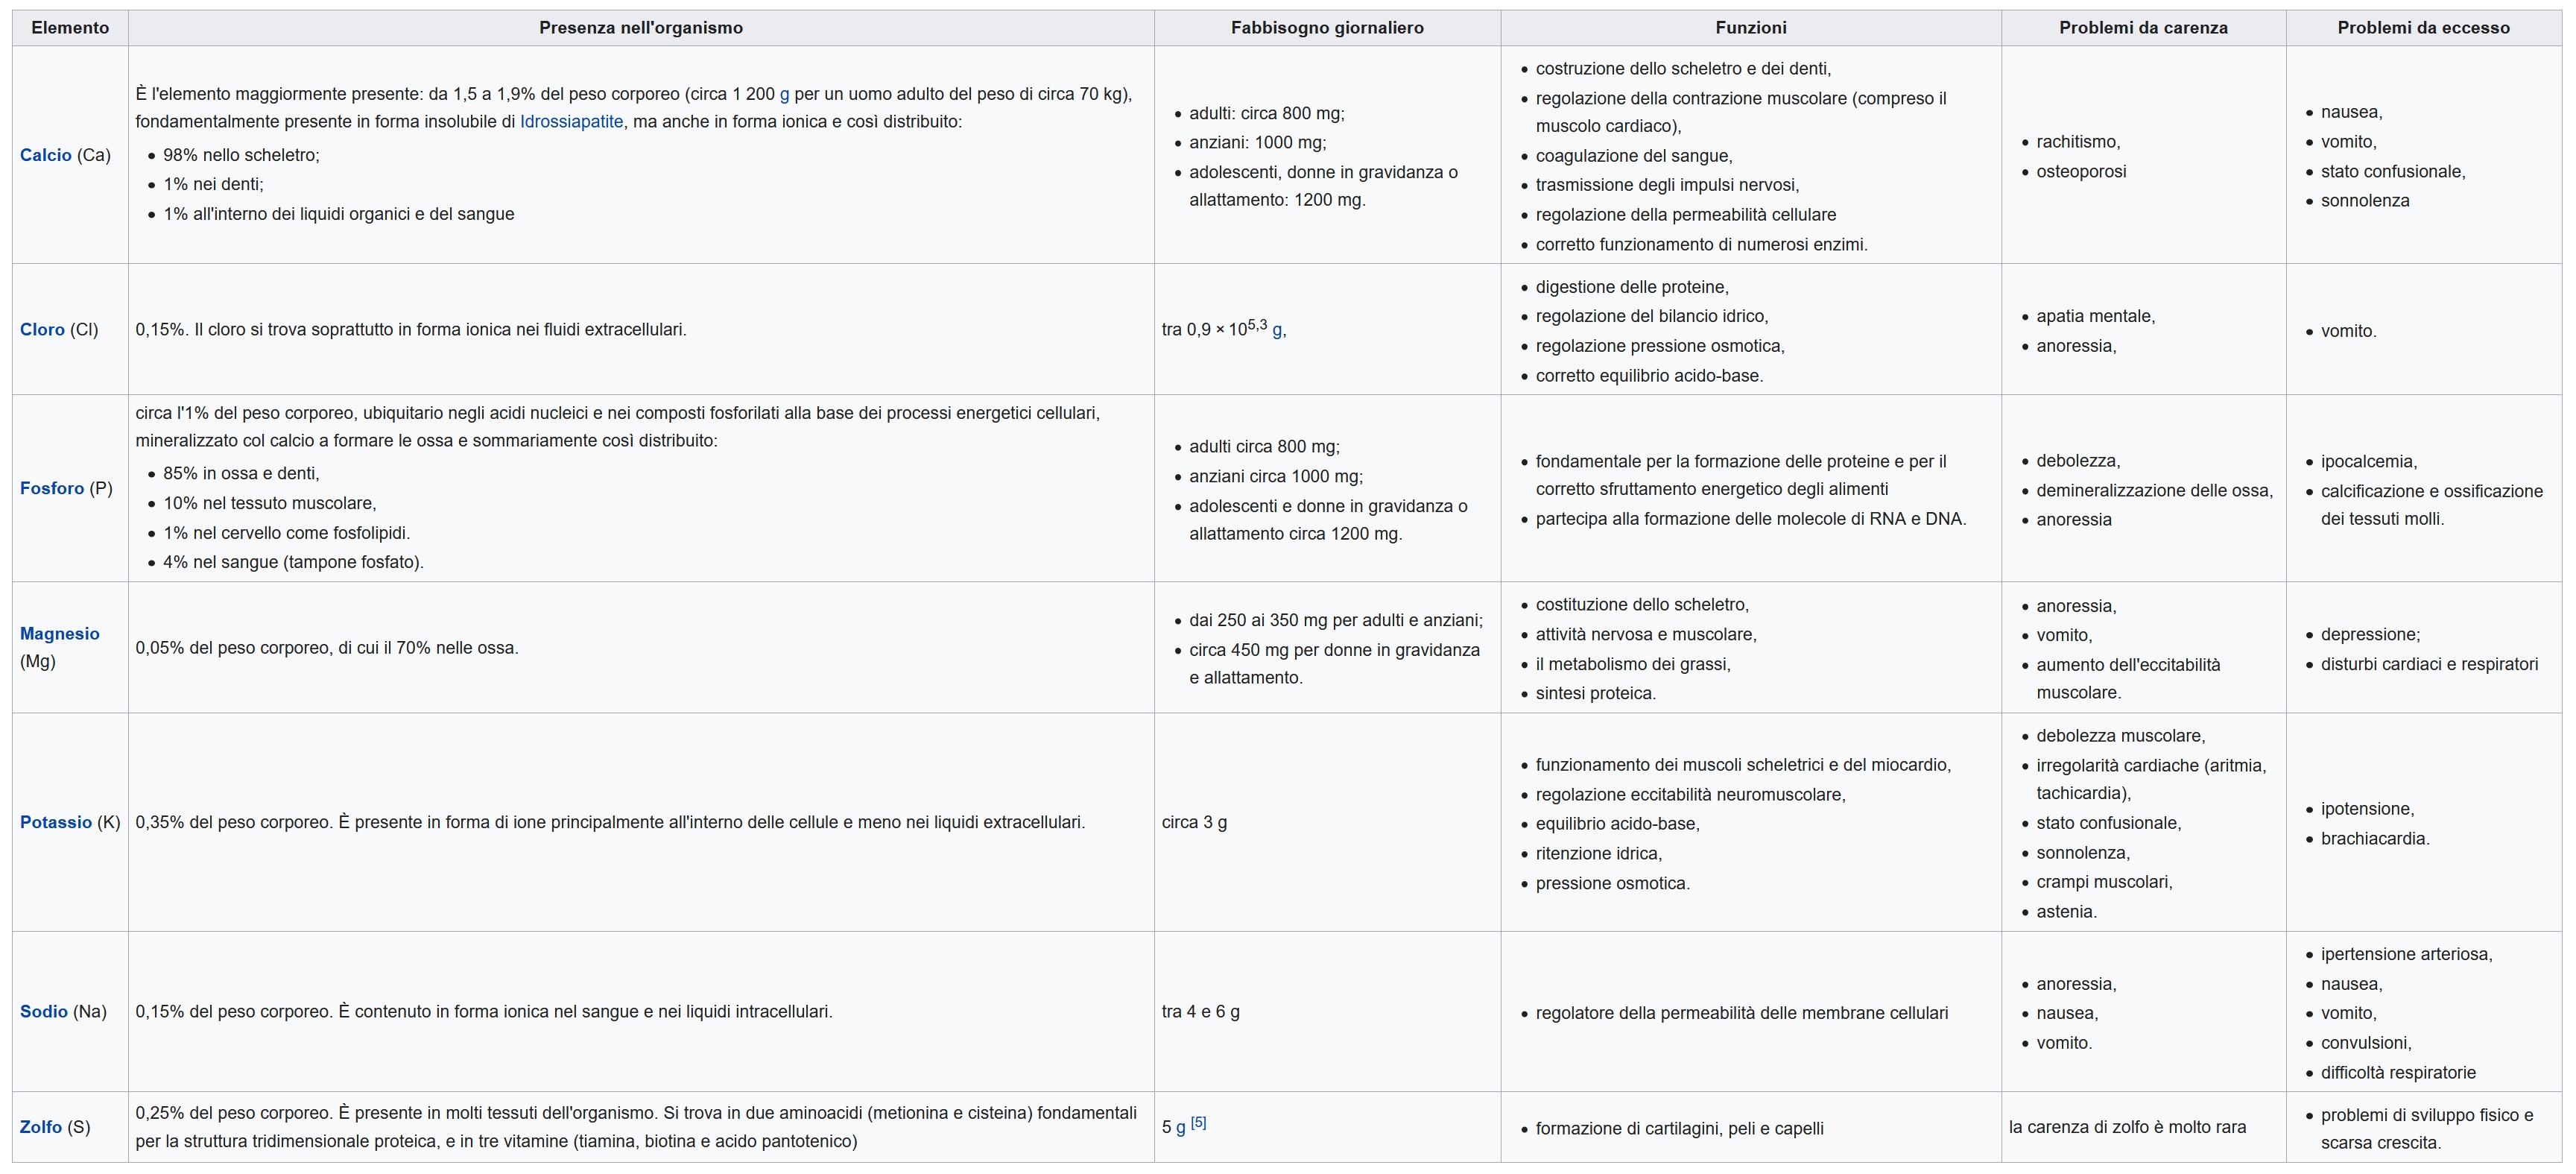 tabella sali minerali (mod. da wikipedia)